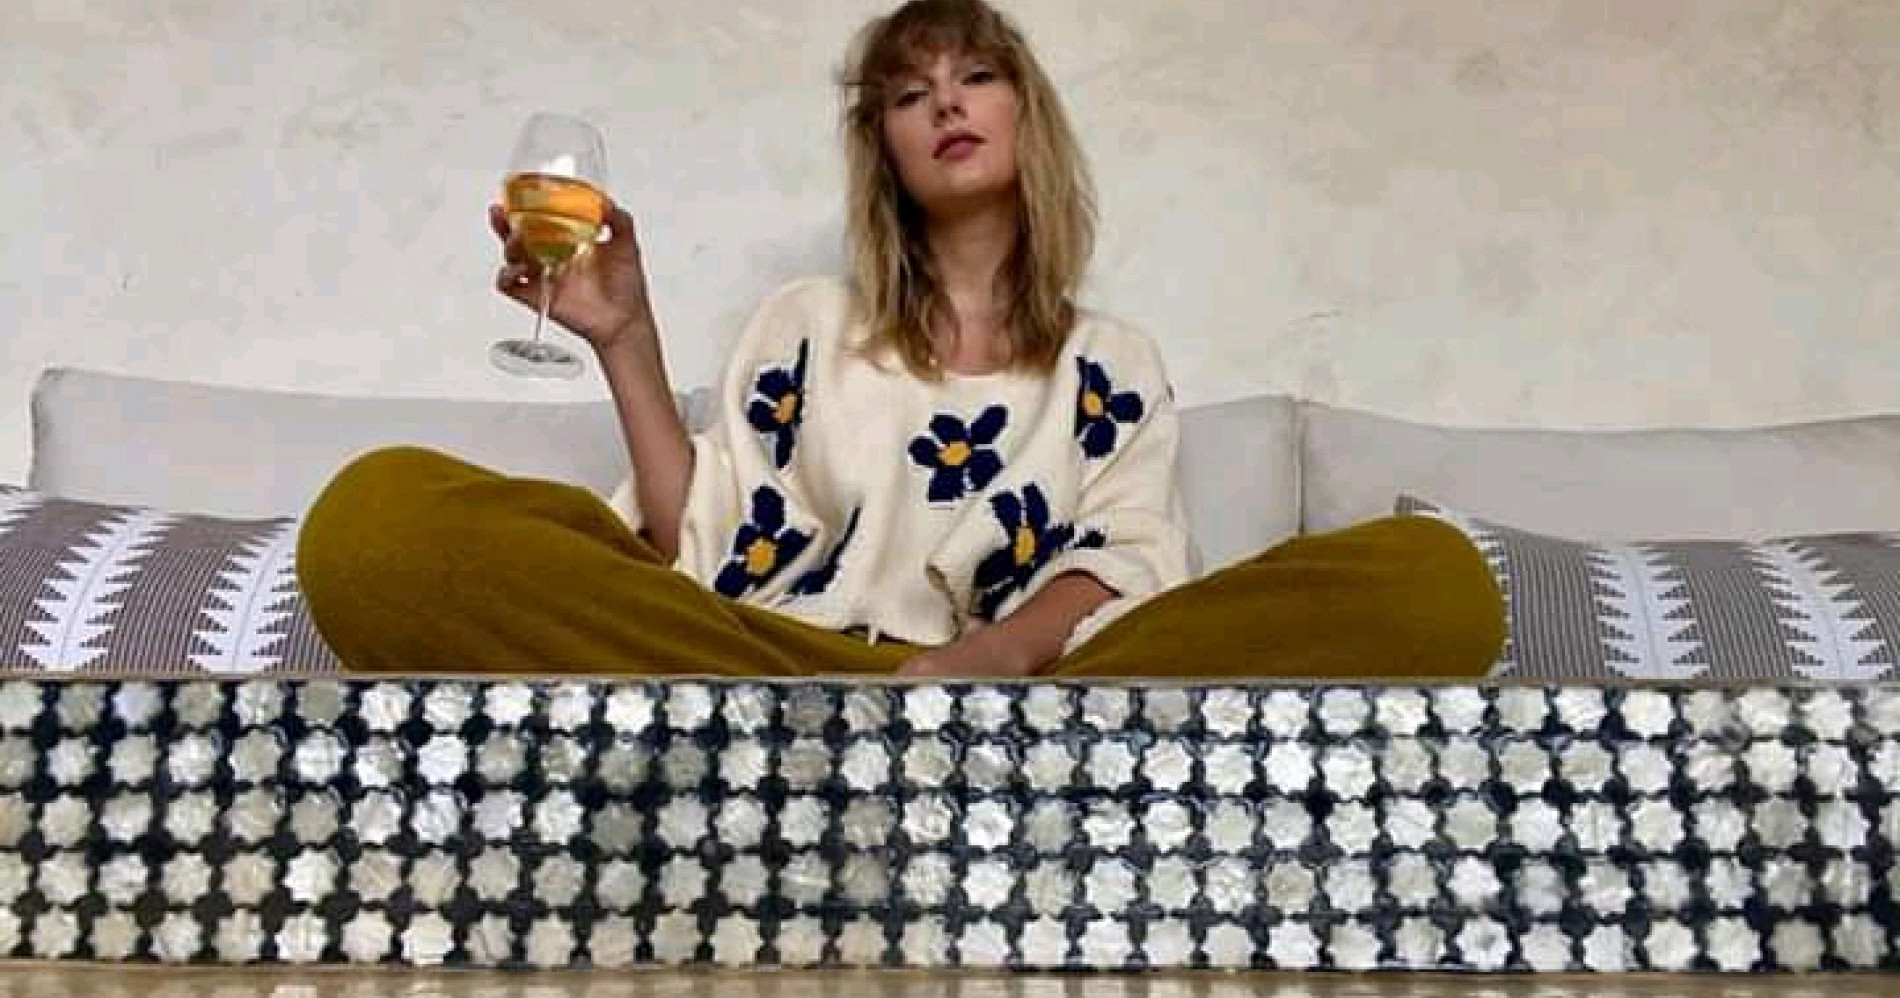 Taylor Swift sedang mengisolasi diri di rumahnya, 'biiig isolation'. Tulisnya di sosial media.